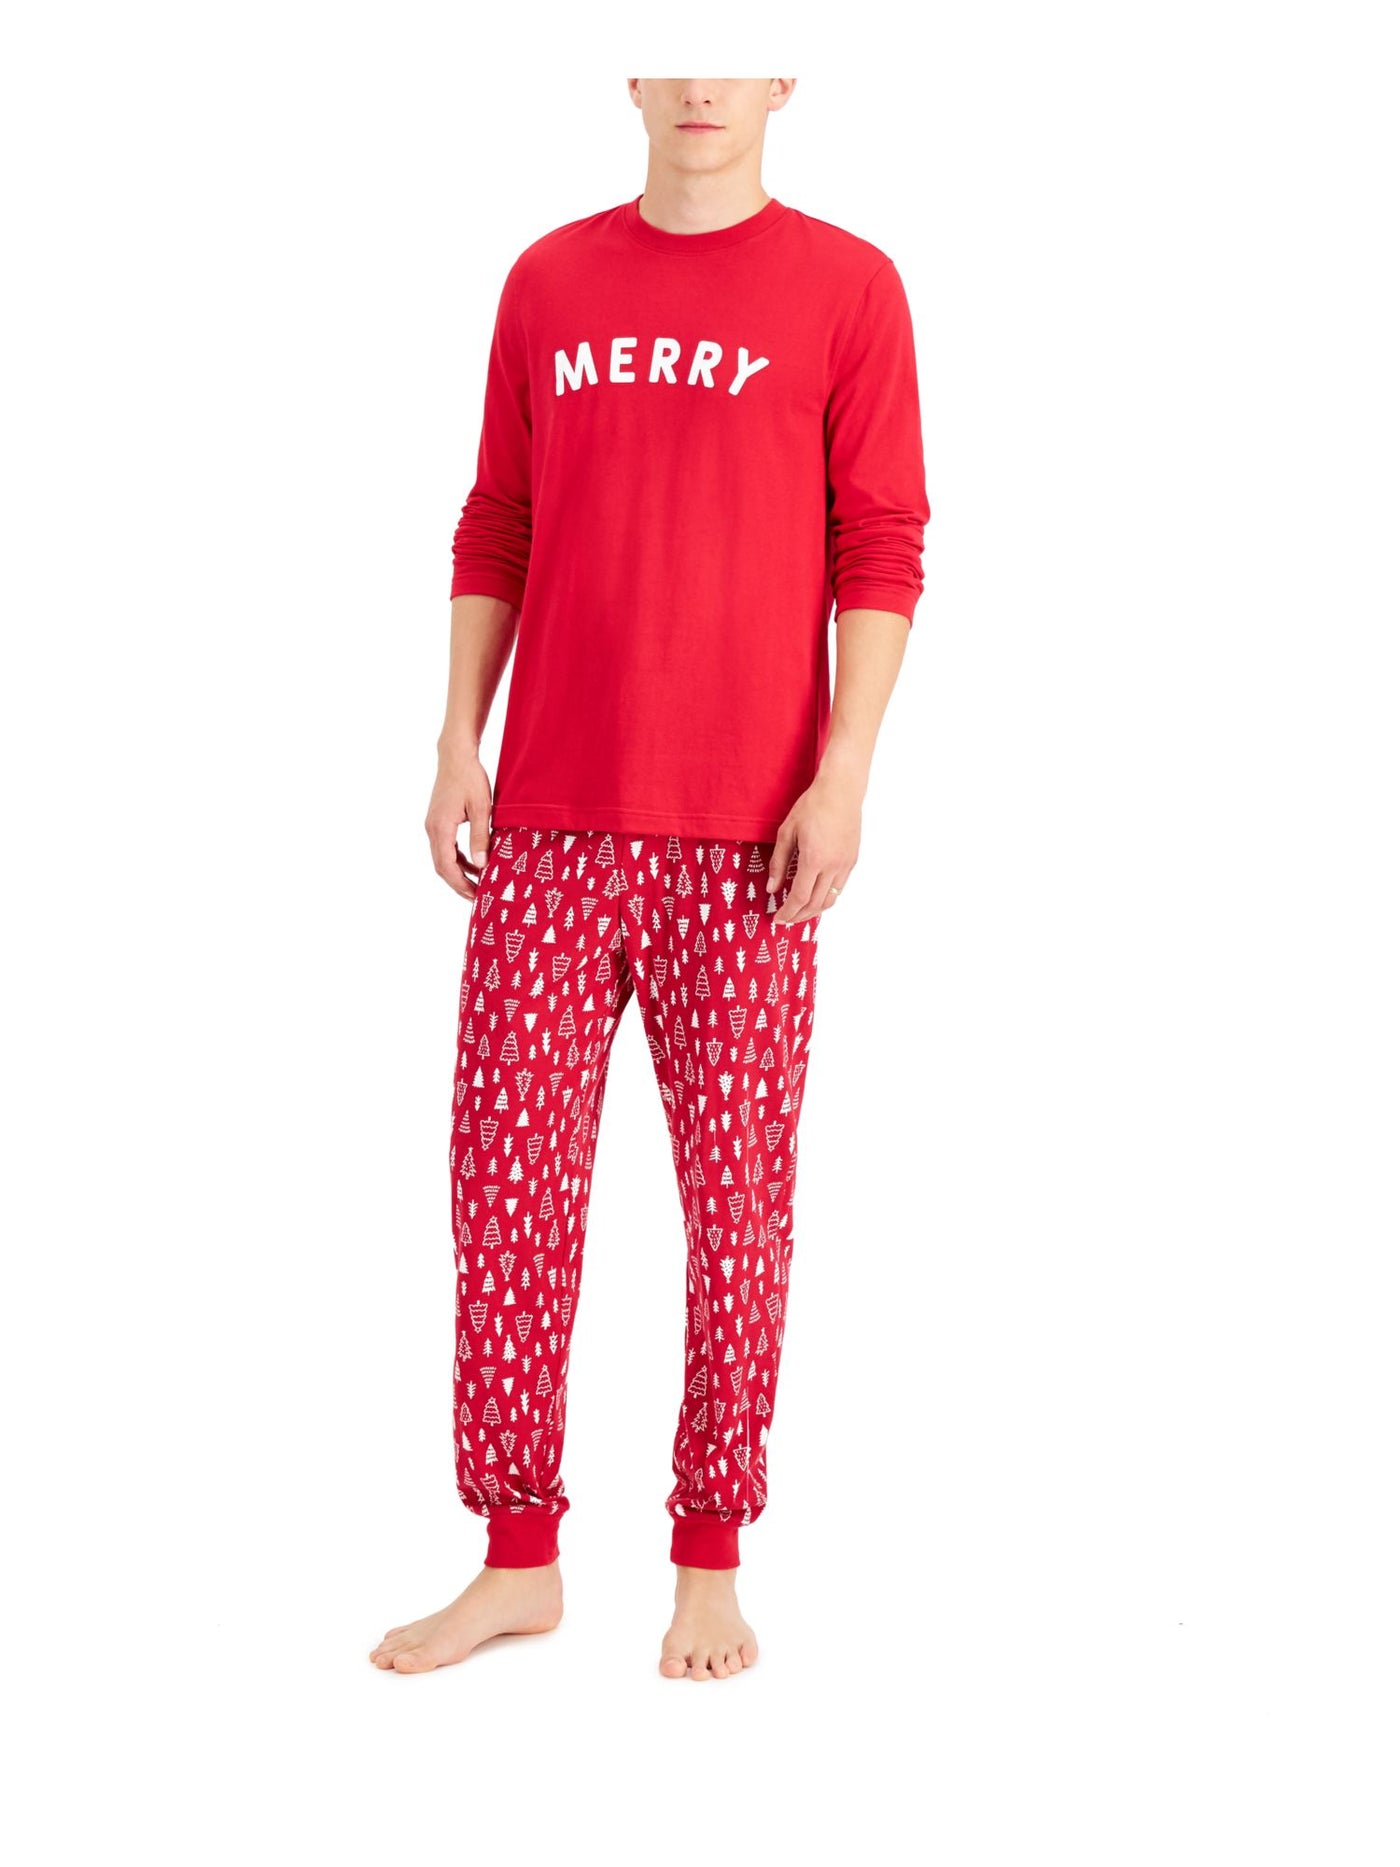 FAMILY PJs Mens Red Printed Elastic Band T-Shirt Top Cuffed Pants Pajamas Big & Tall 2XB